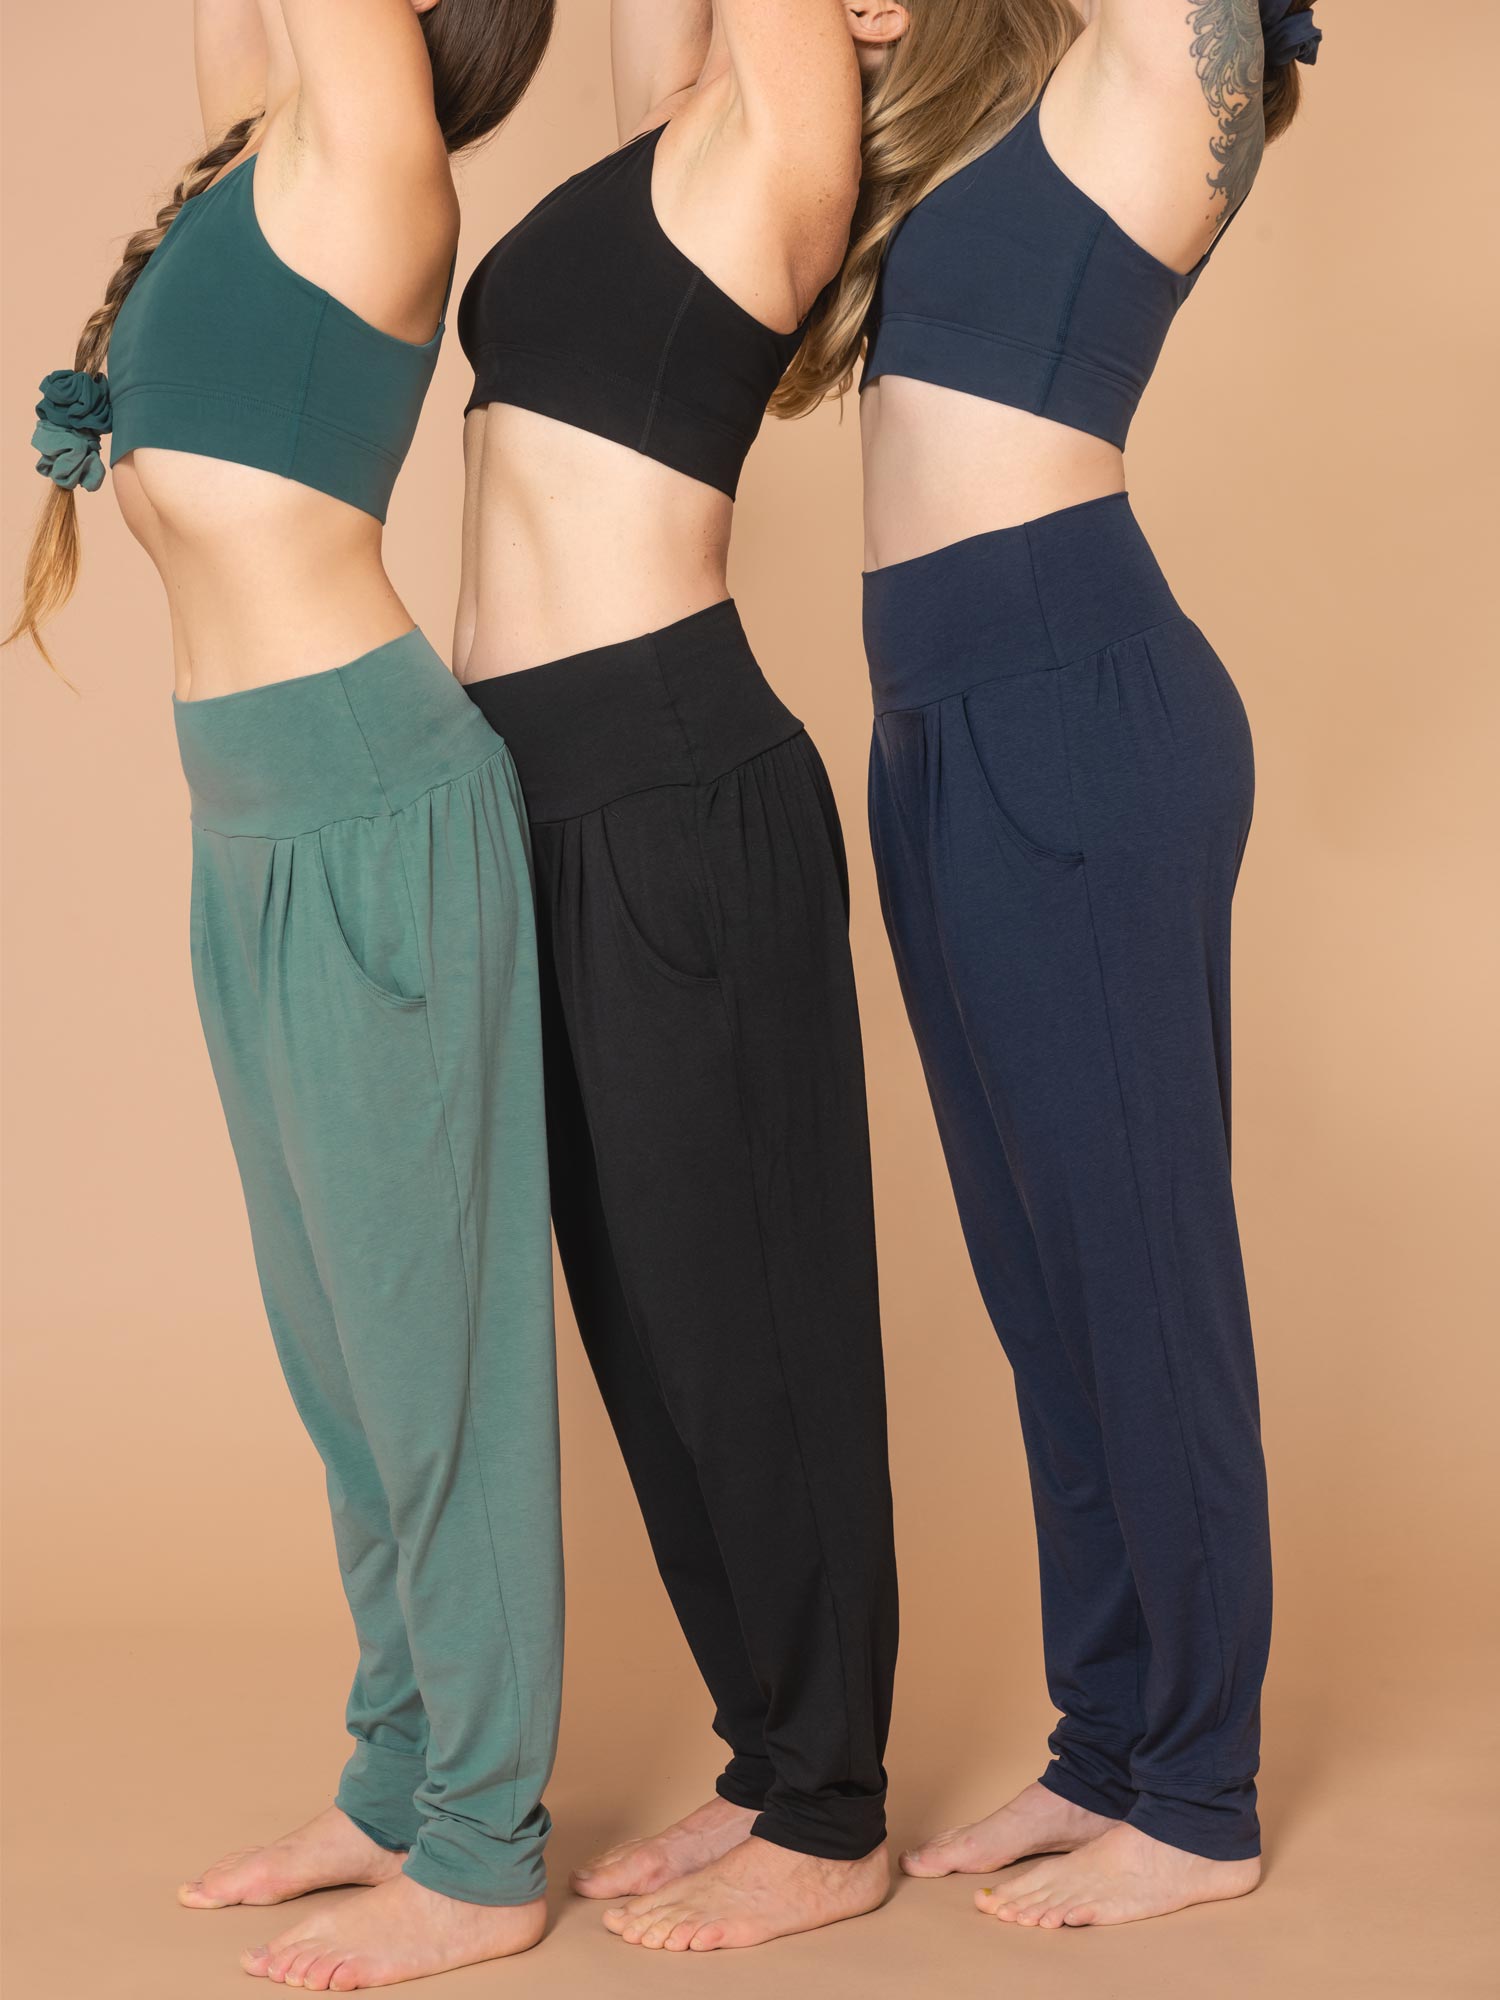 Yoga Hose aus Tencel in mehreren Farben